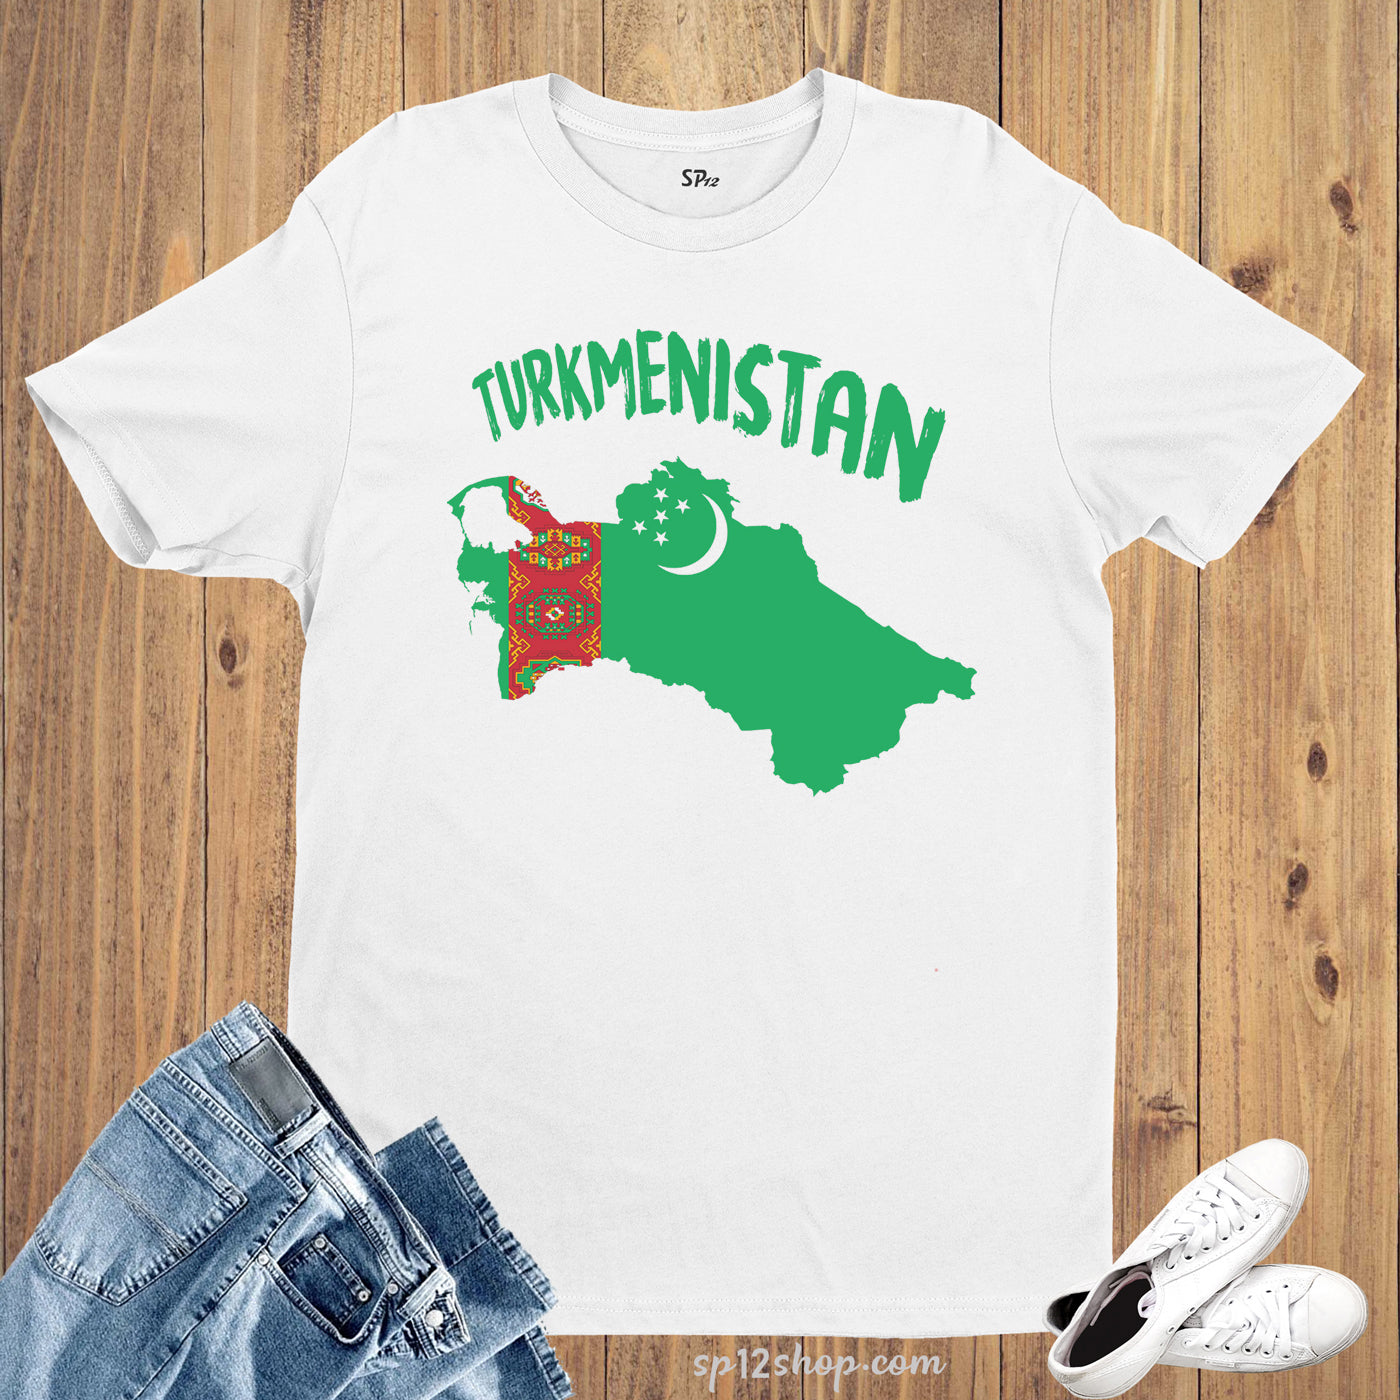 Turkmenistan Flag T Shirt Olympics FIFA World Cup Country Flag Tee Shirt